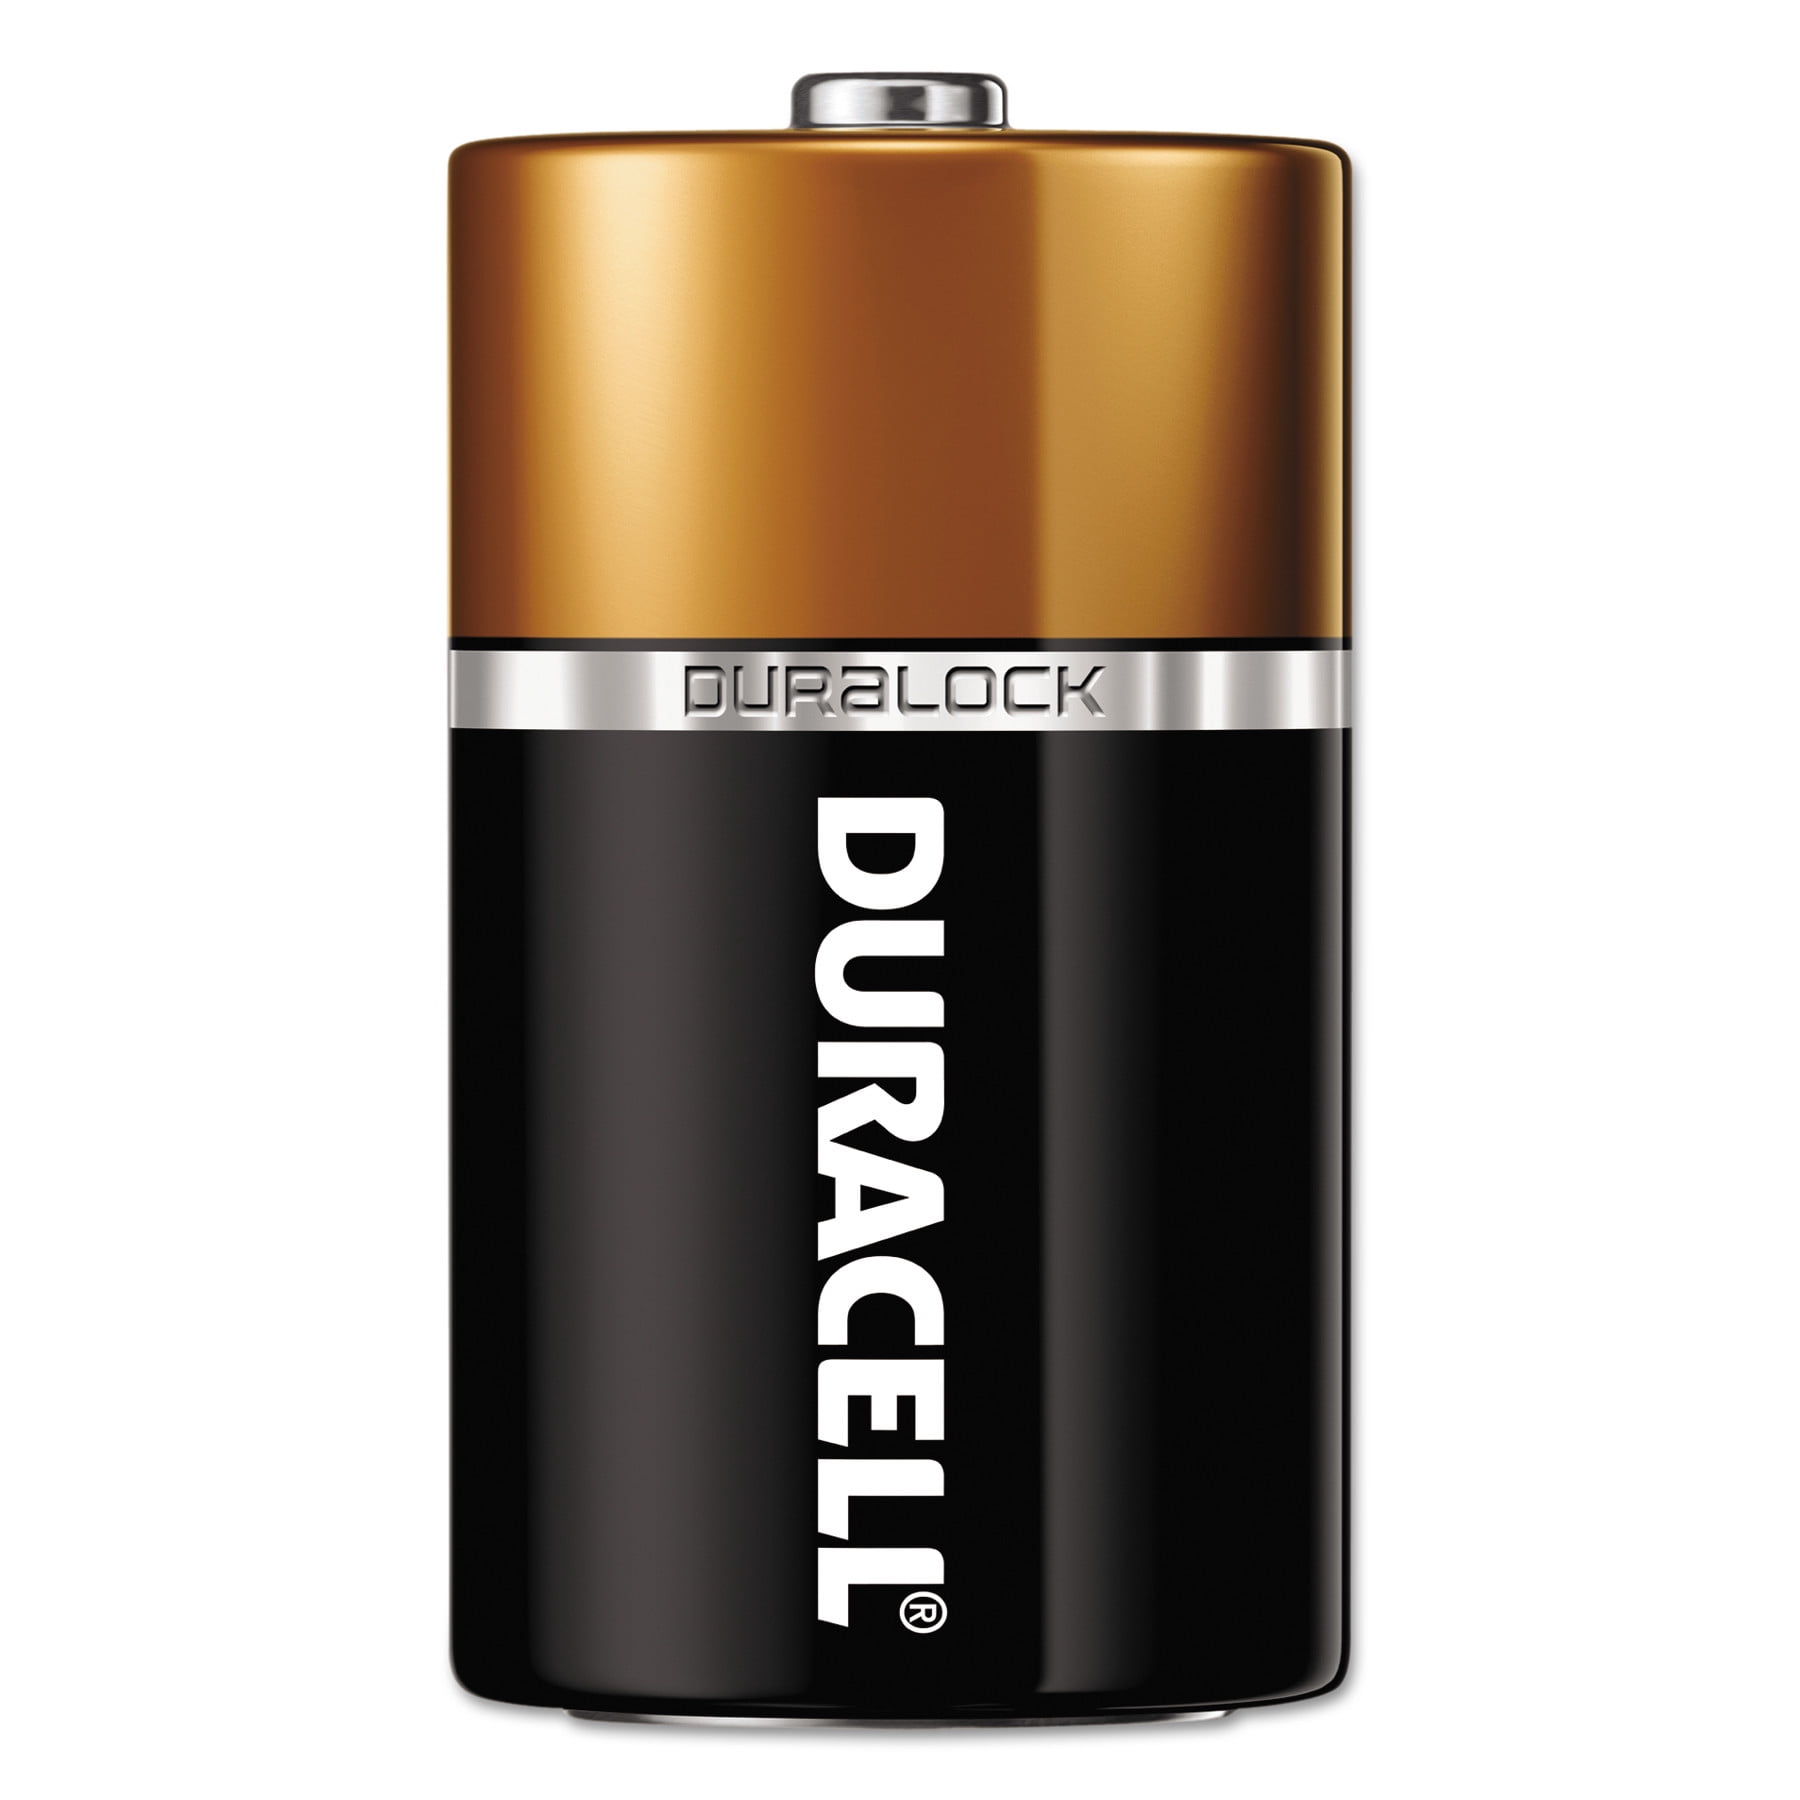 D-Batterie LR20, Alkaline 1,5V eveready gold - ESPINOSA